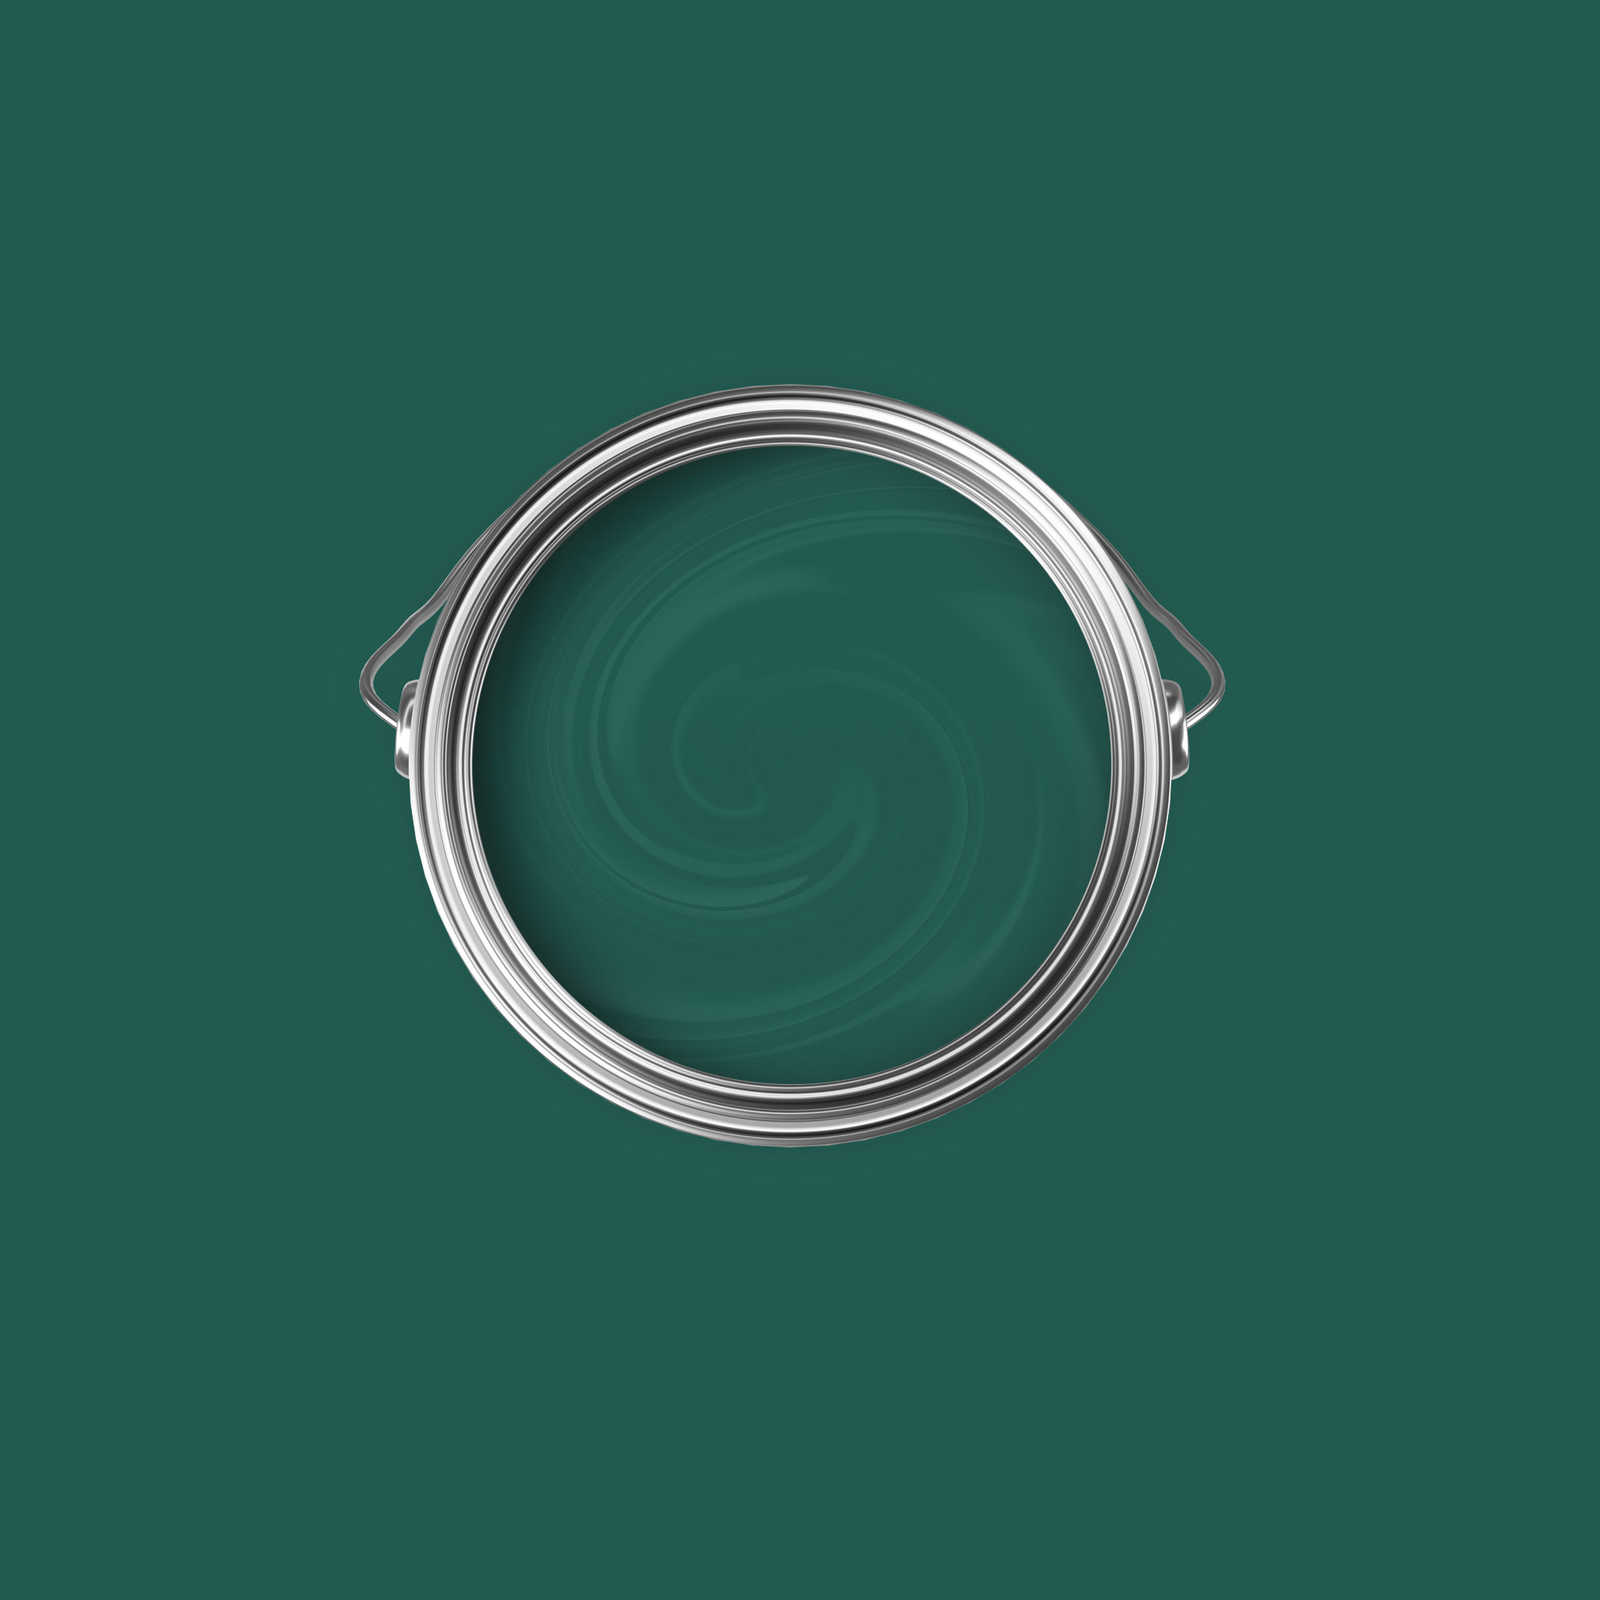             Premium Wandfarbe prachtvolles Smaragdgrün »Expressive Emerald« NW412 – 2,5 Liter
        